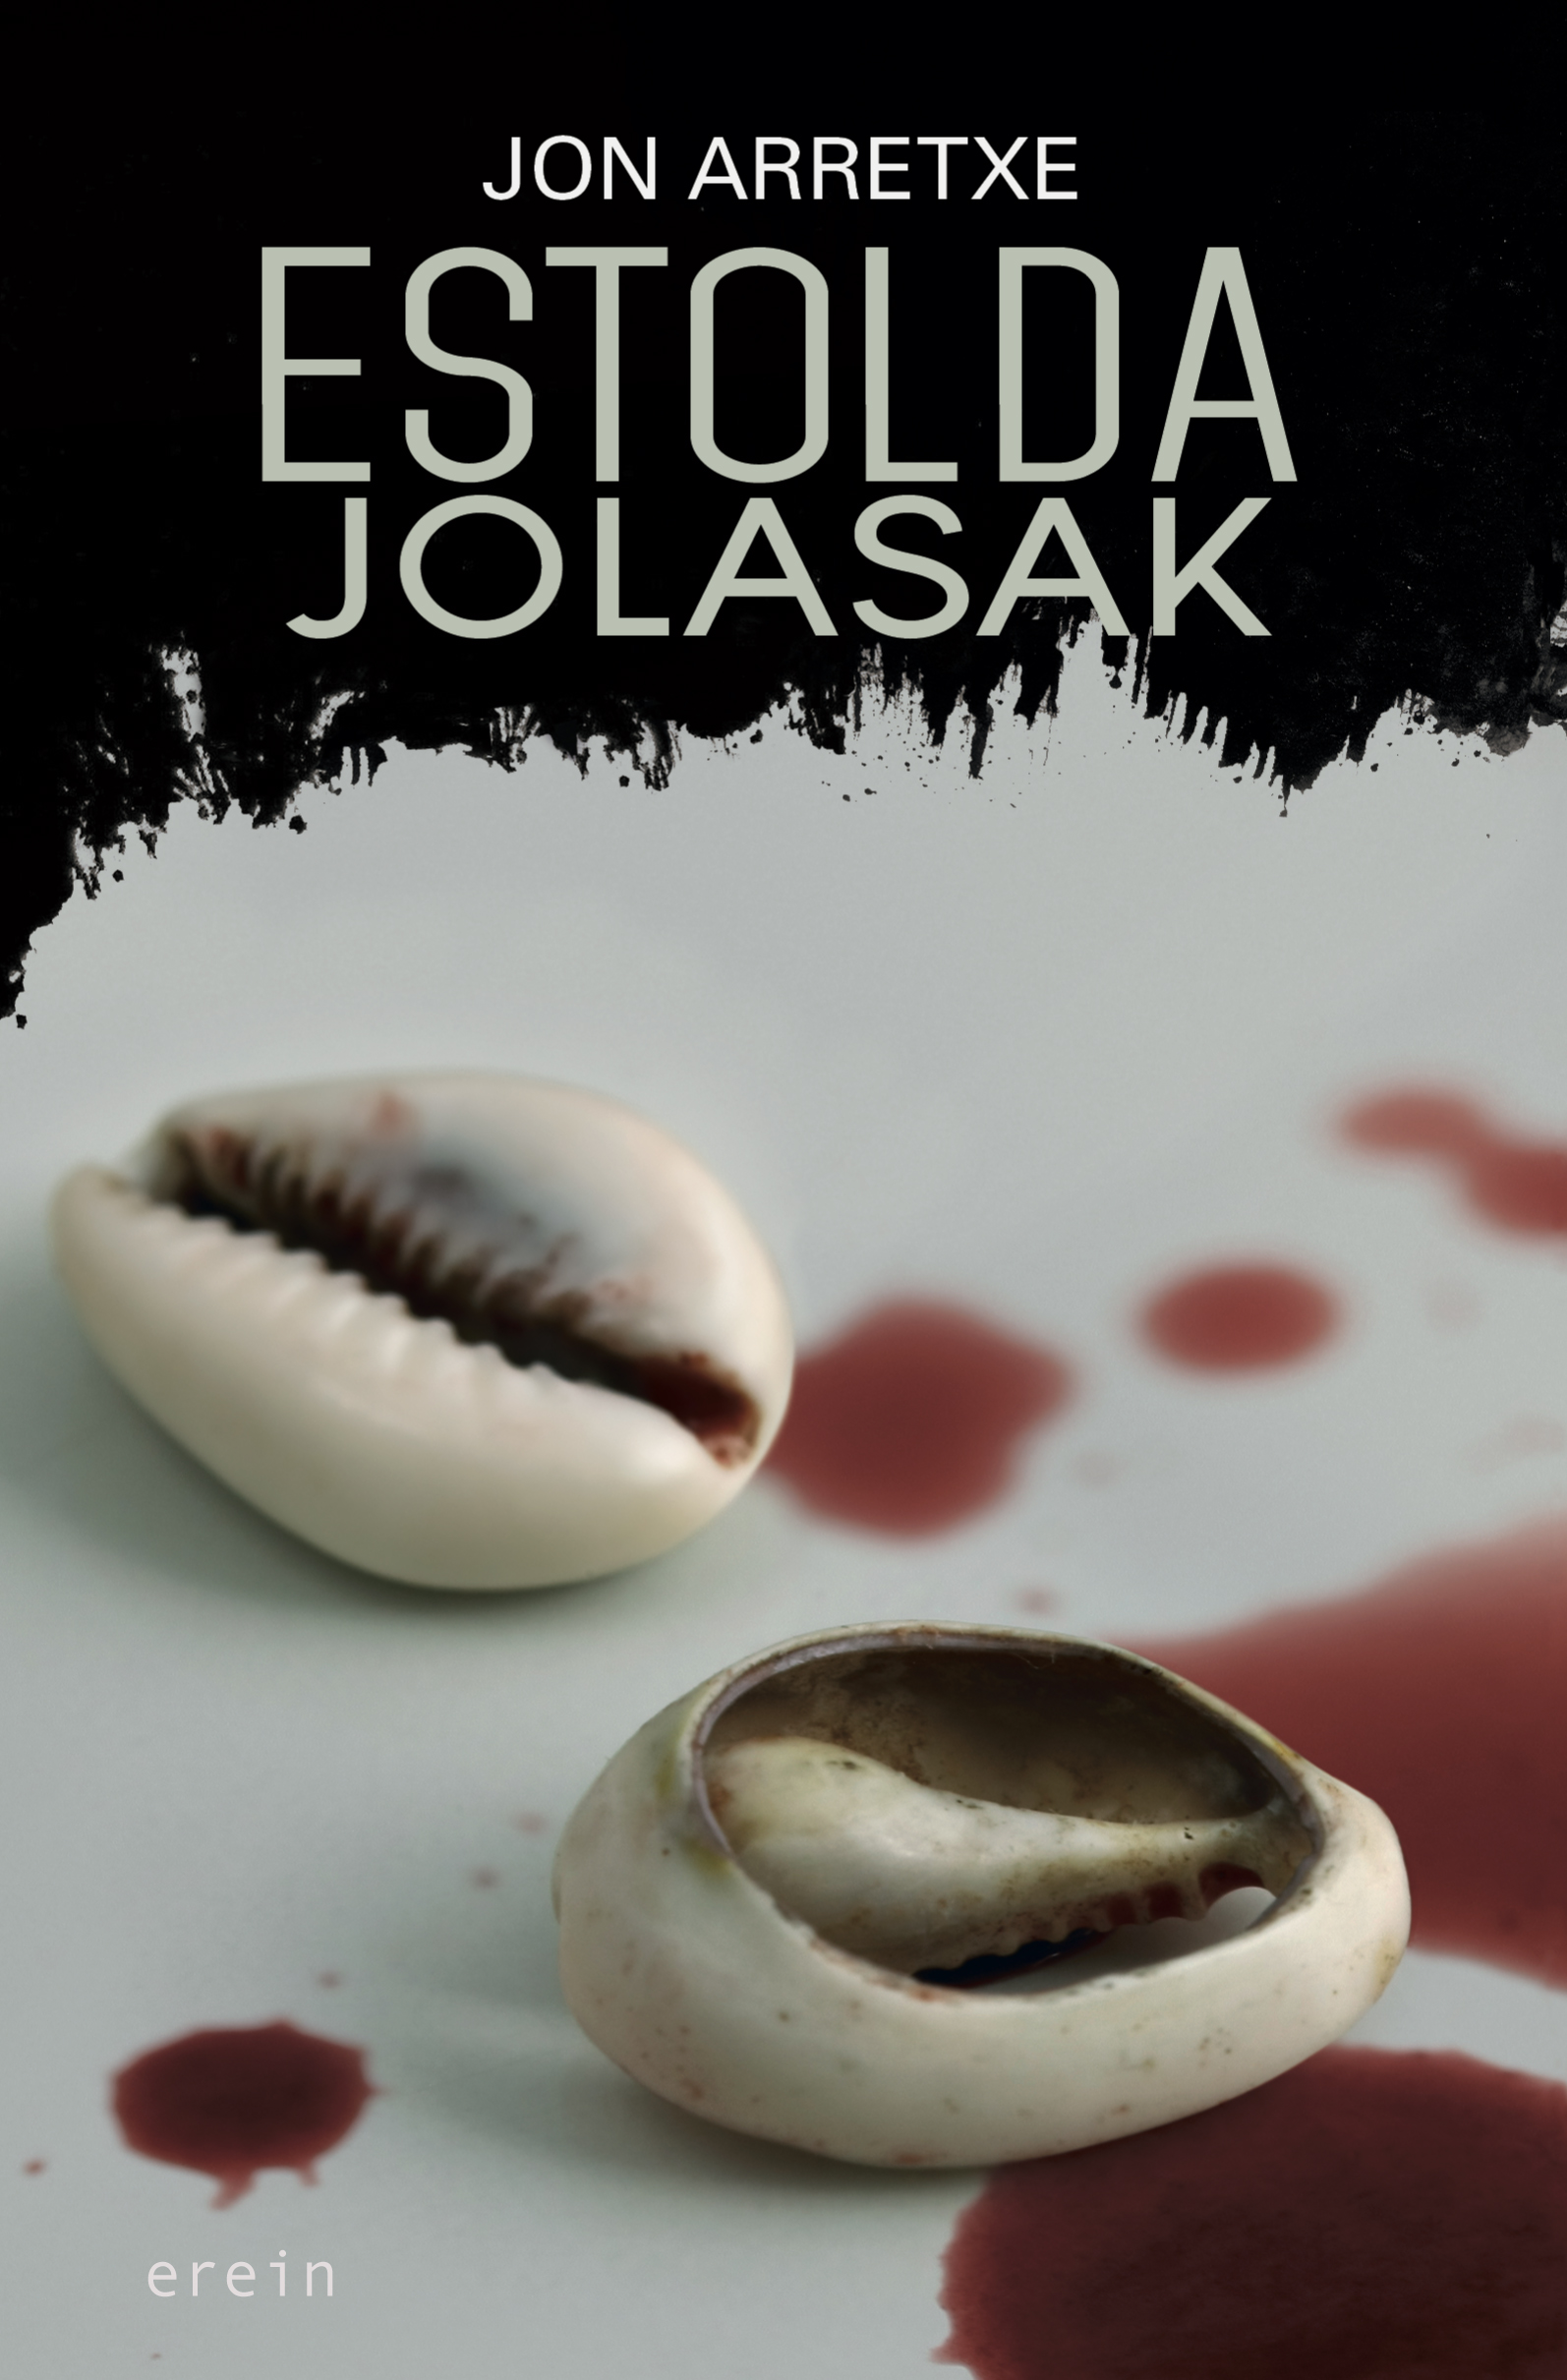 Estolda jolasak (Paperback, Euskara language, Erein)